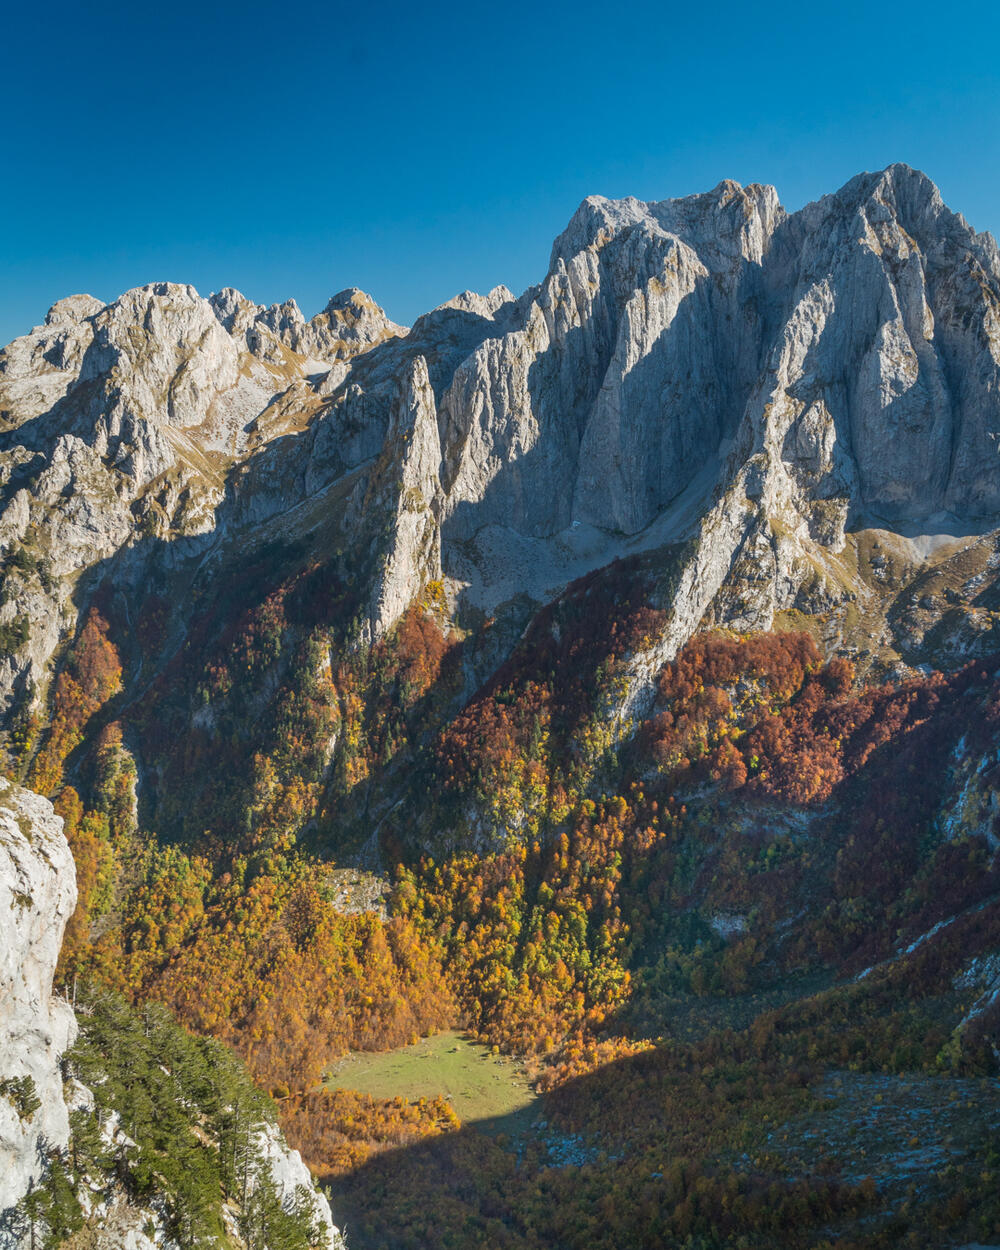 Prokletije mountains have the highest peak in Montenegro